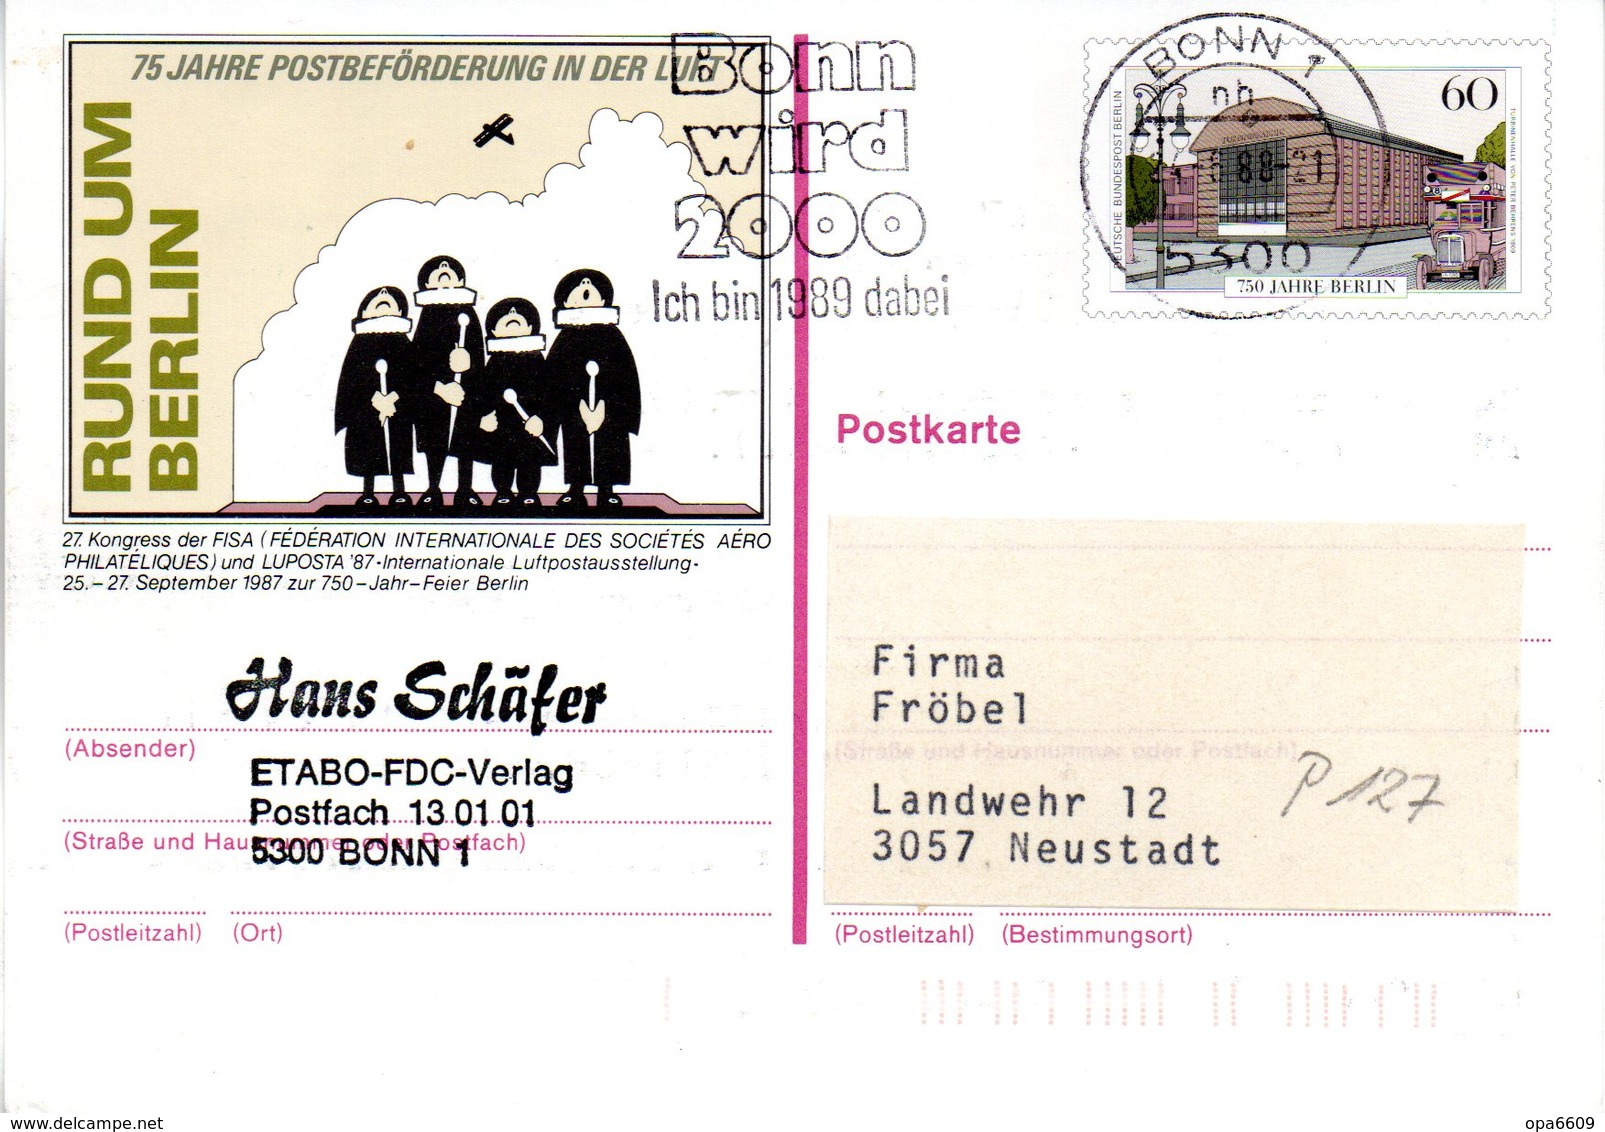 WB Amtliche Ganzsachen-Sonderpostkarte P 127 "LUPOSTA'87" Wst."750 Jahre Berlin" 60(Pf) Mehrfarbig, MWSt 24.8.88 BONN 1 - Postcards - Used